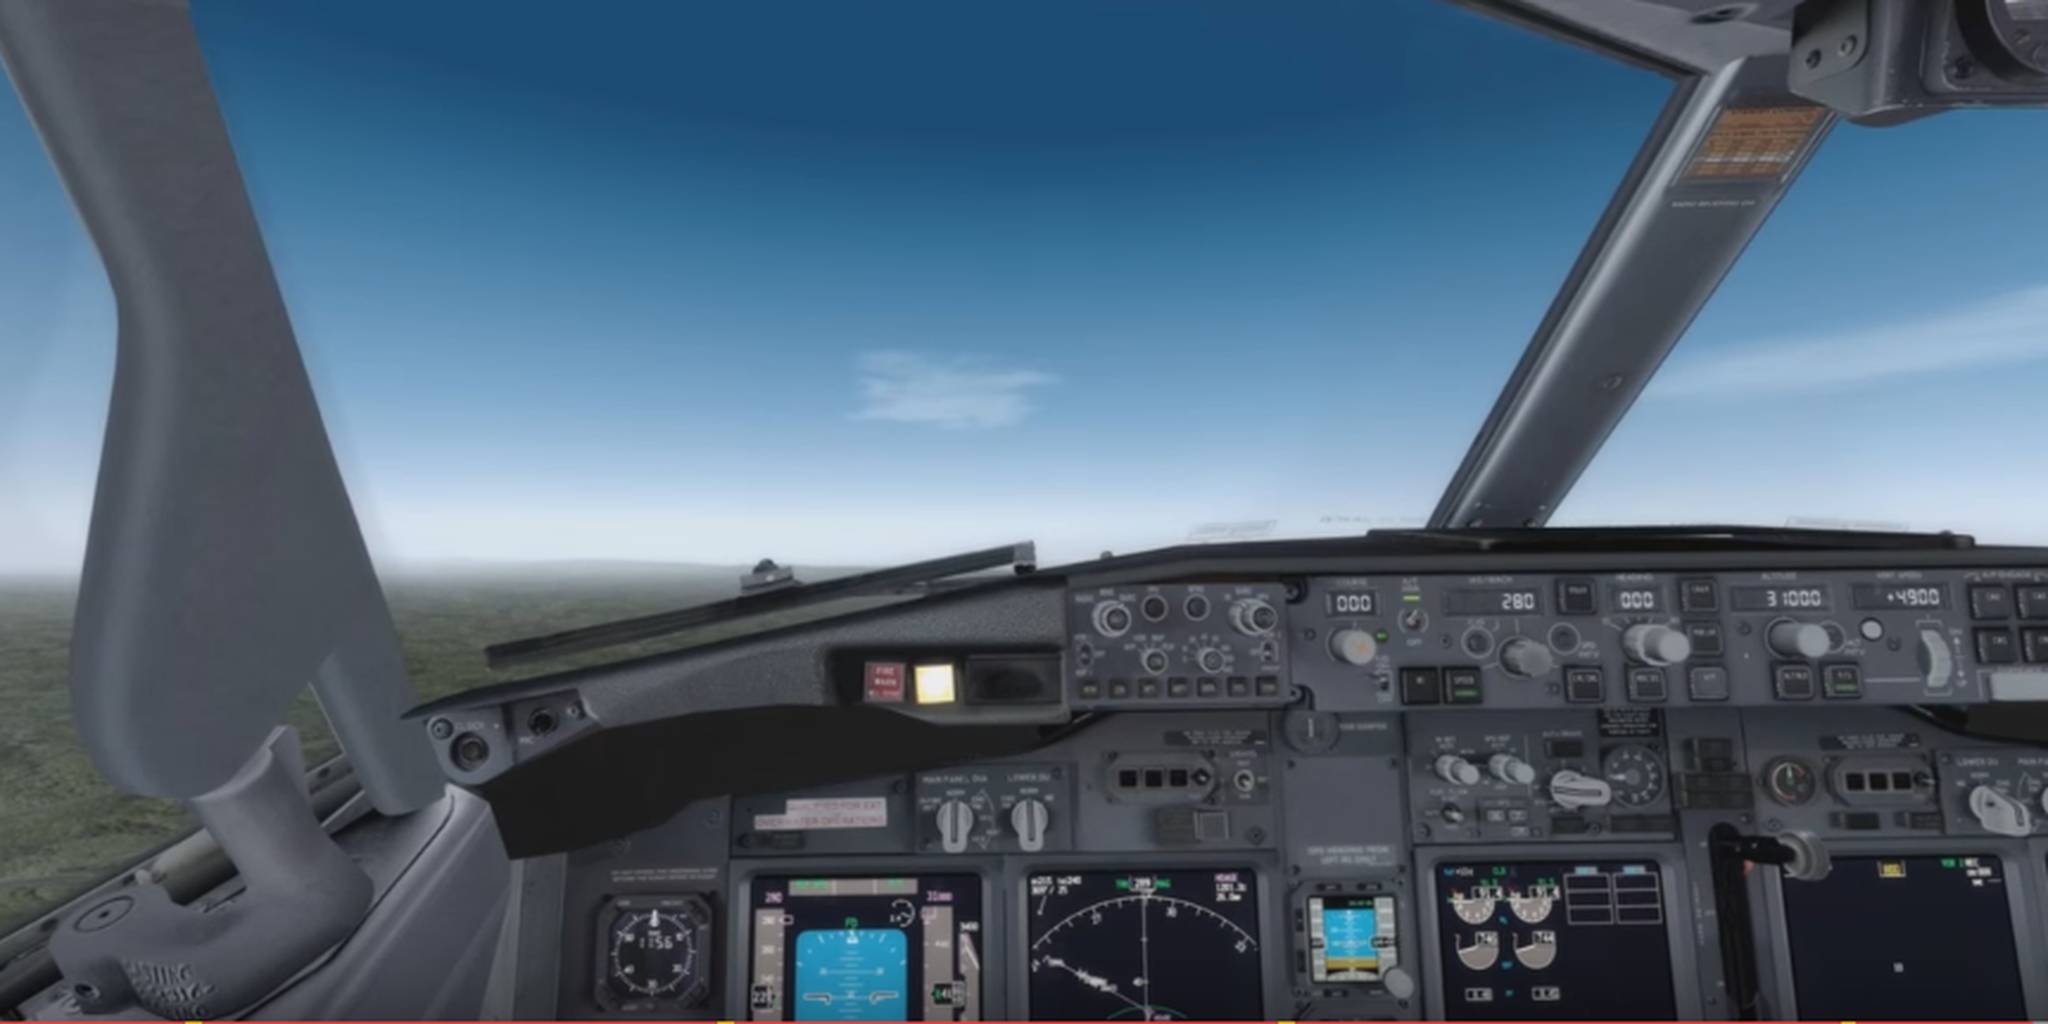 clearview flight simulator free download full version